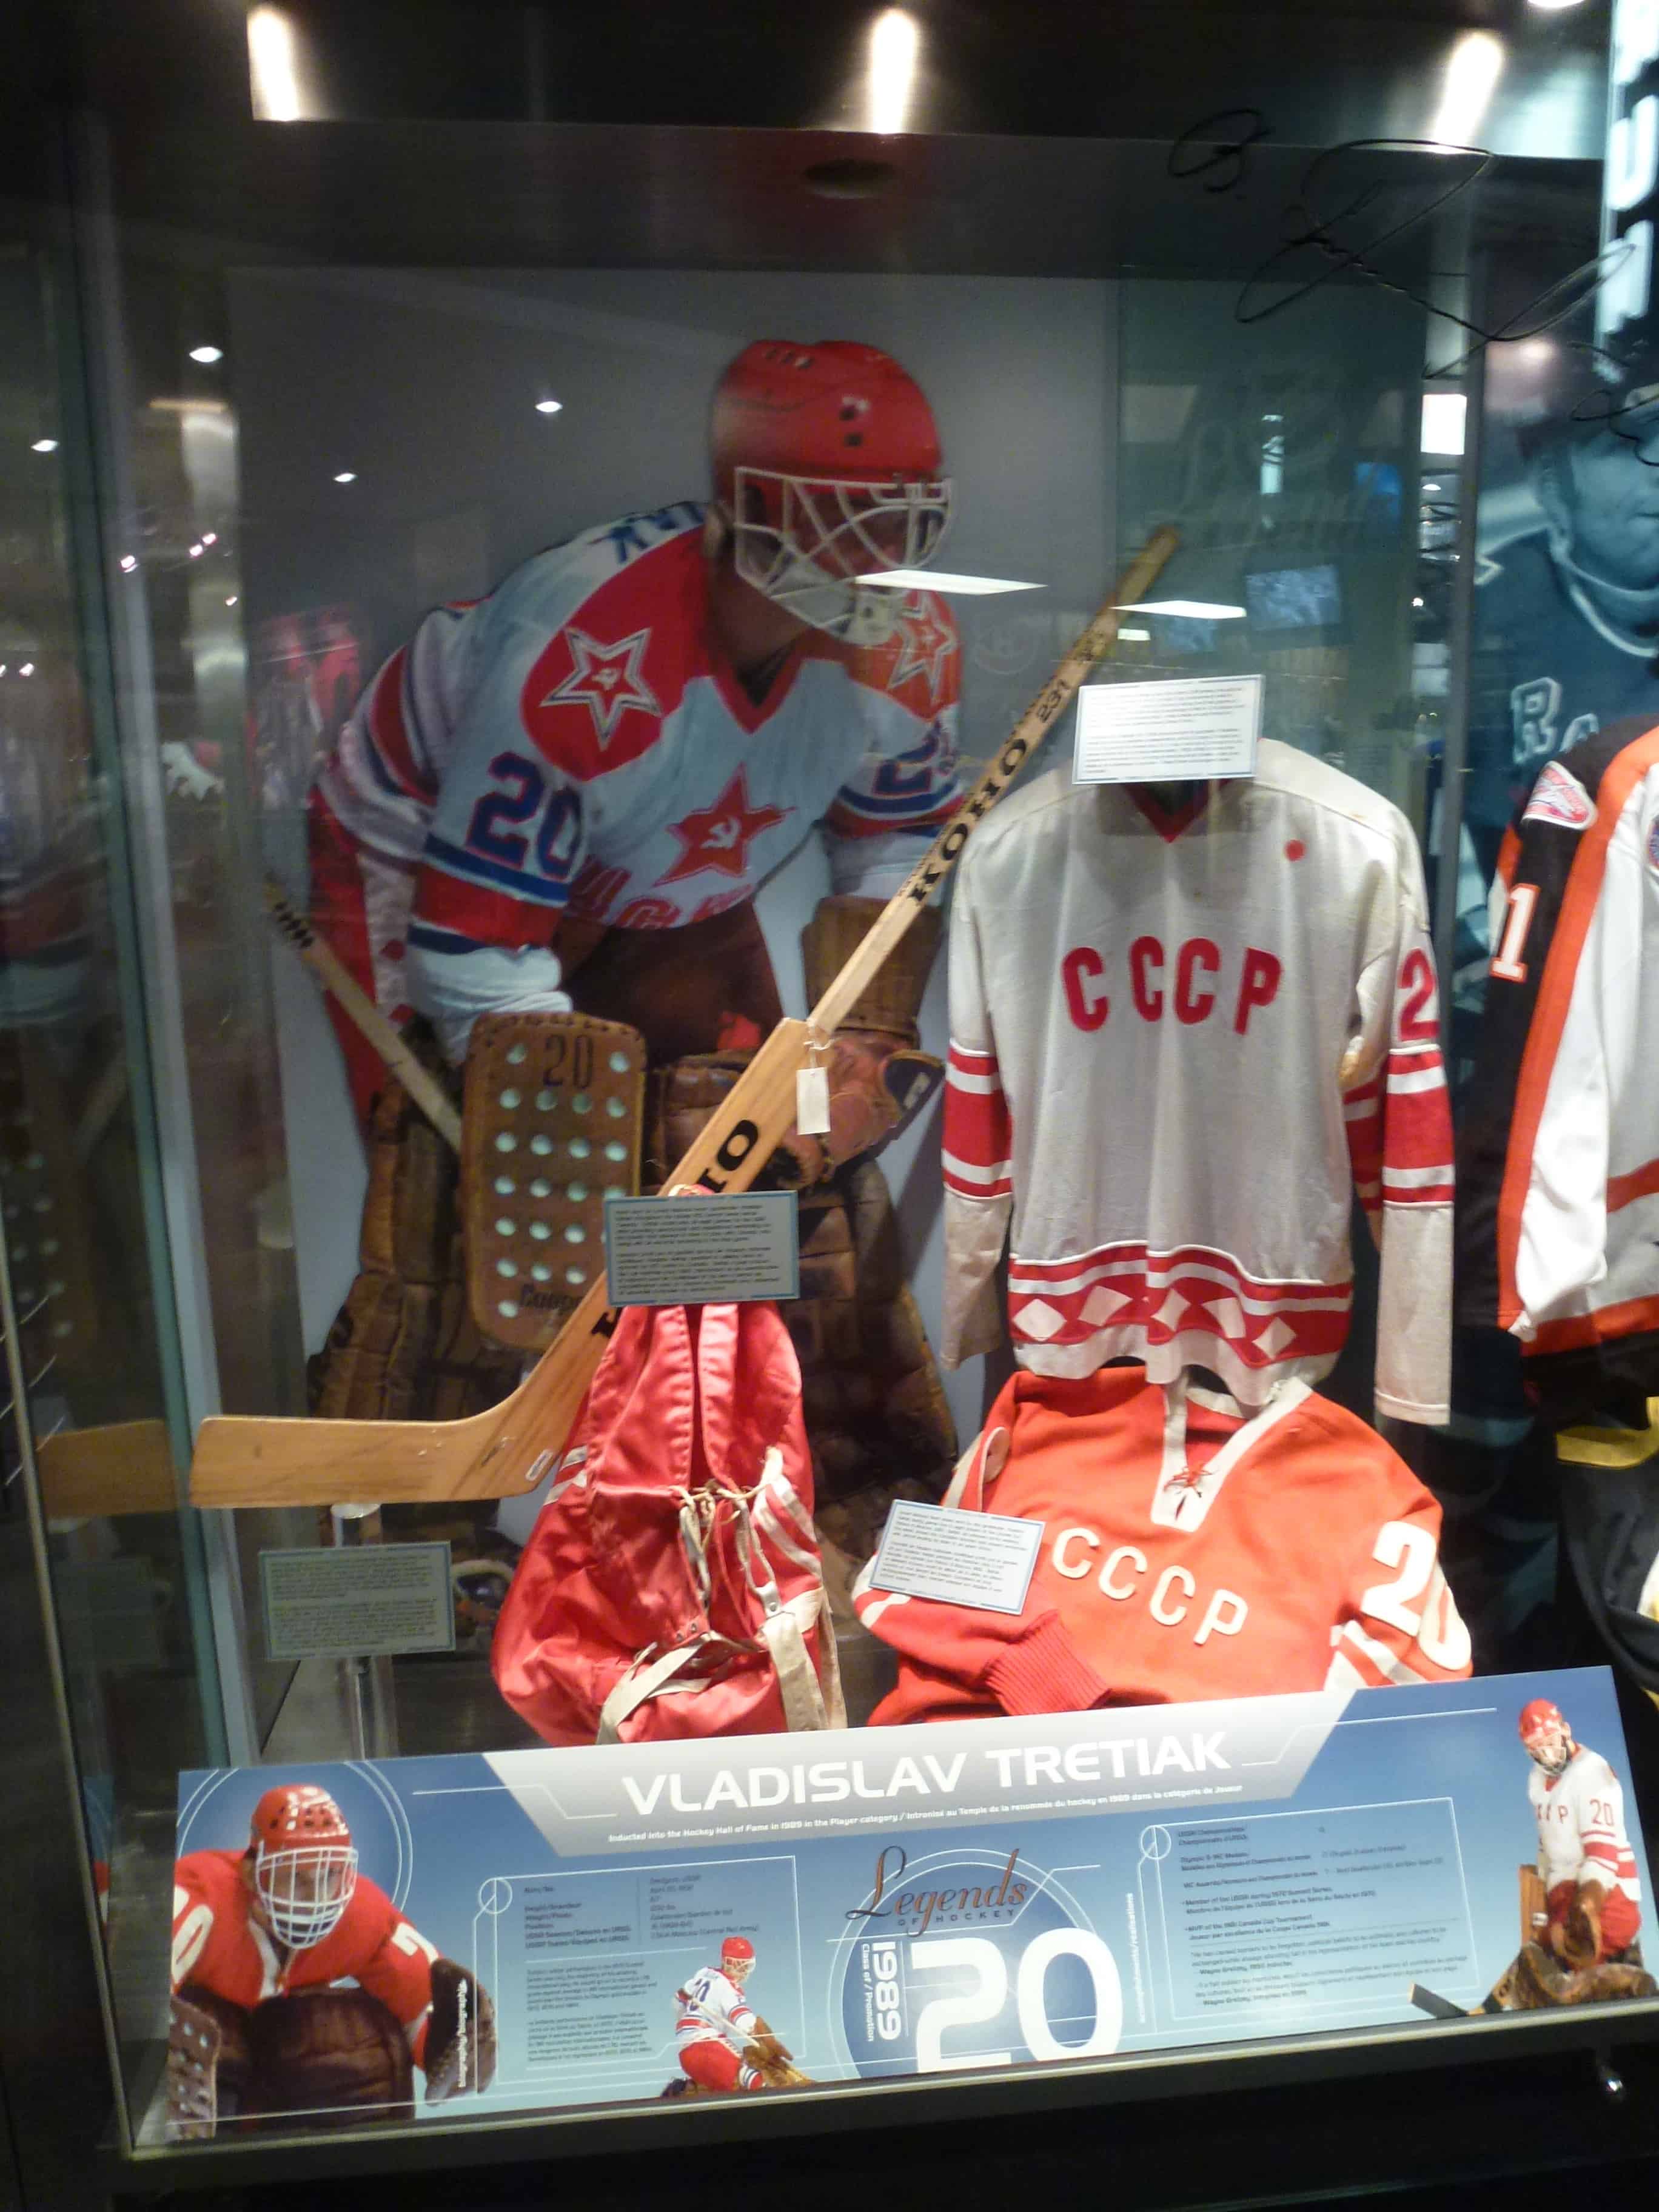 Vladislav Tretiak display at the Hockey Hall of Fame in Toronto, Ontario, Canada